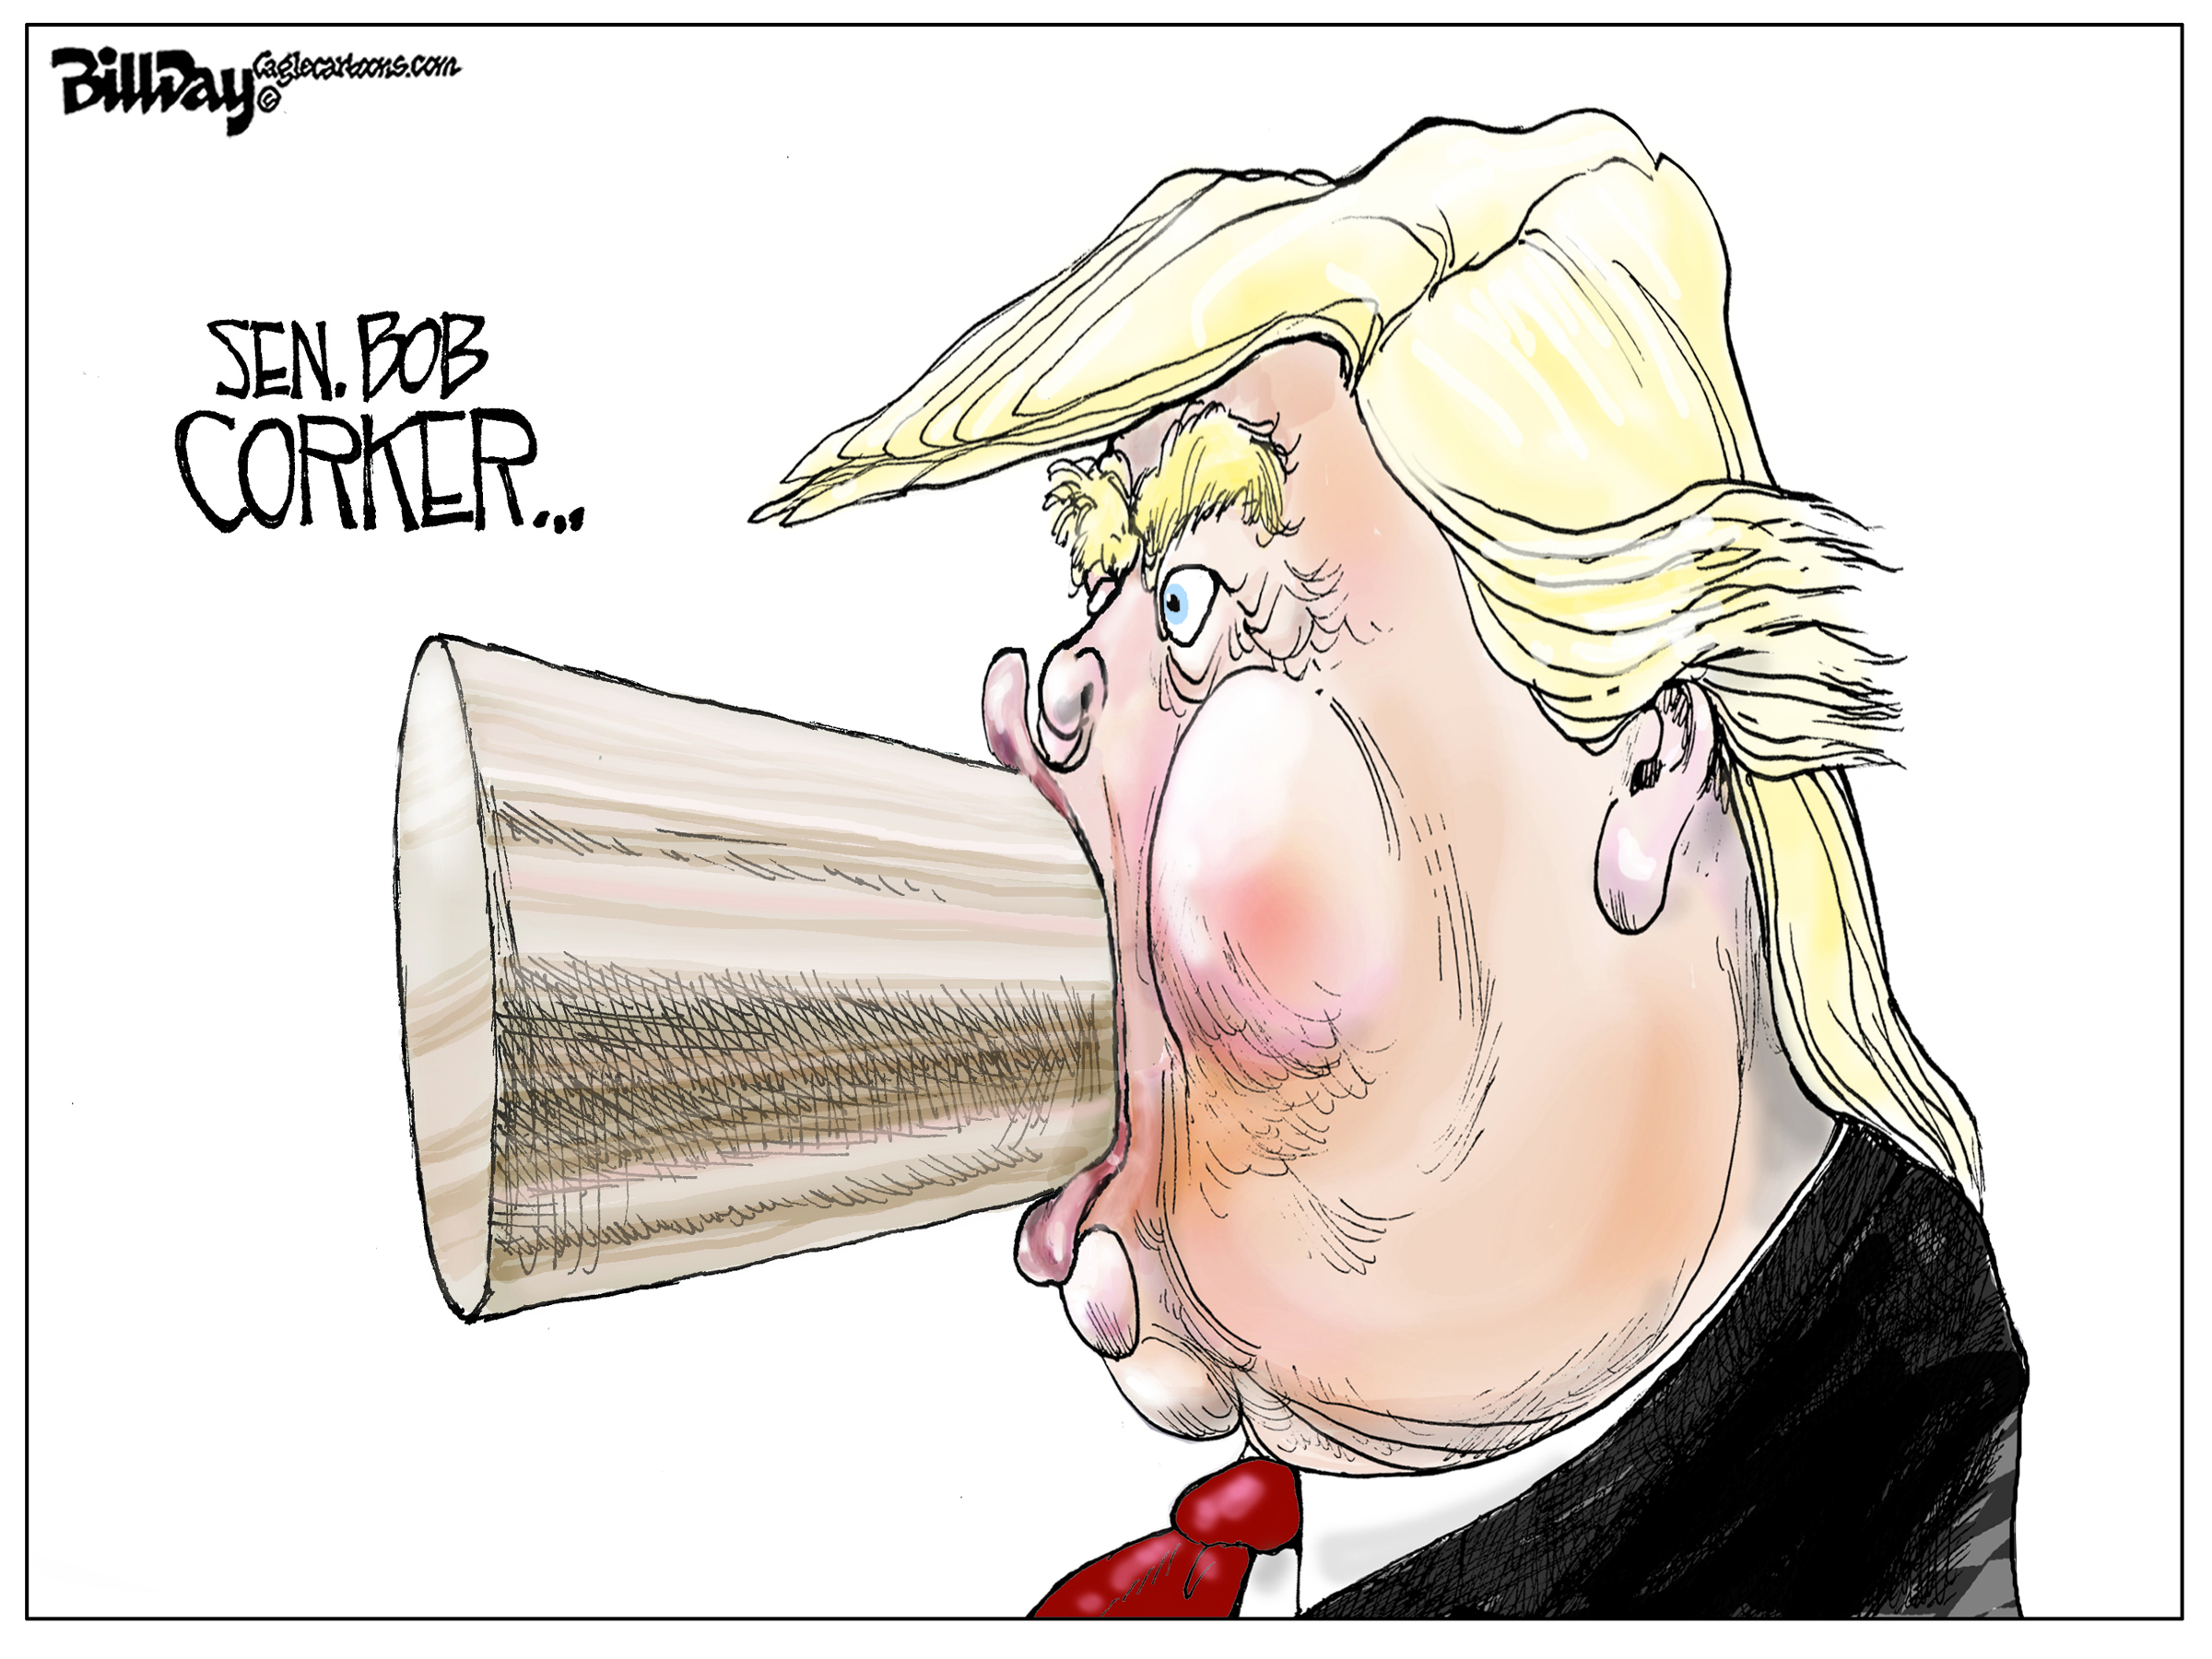 Political cartoon . Trump Bob Corker tweet fight